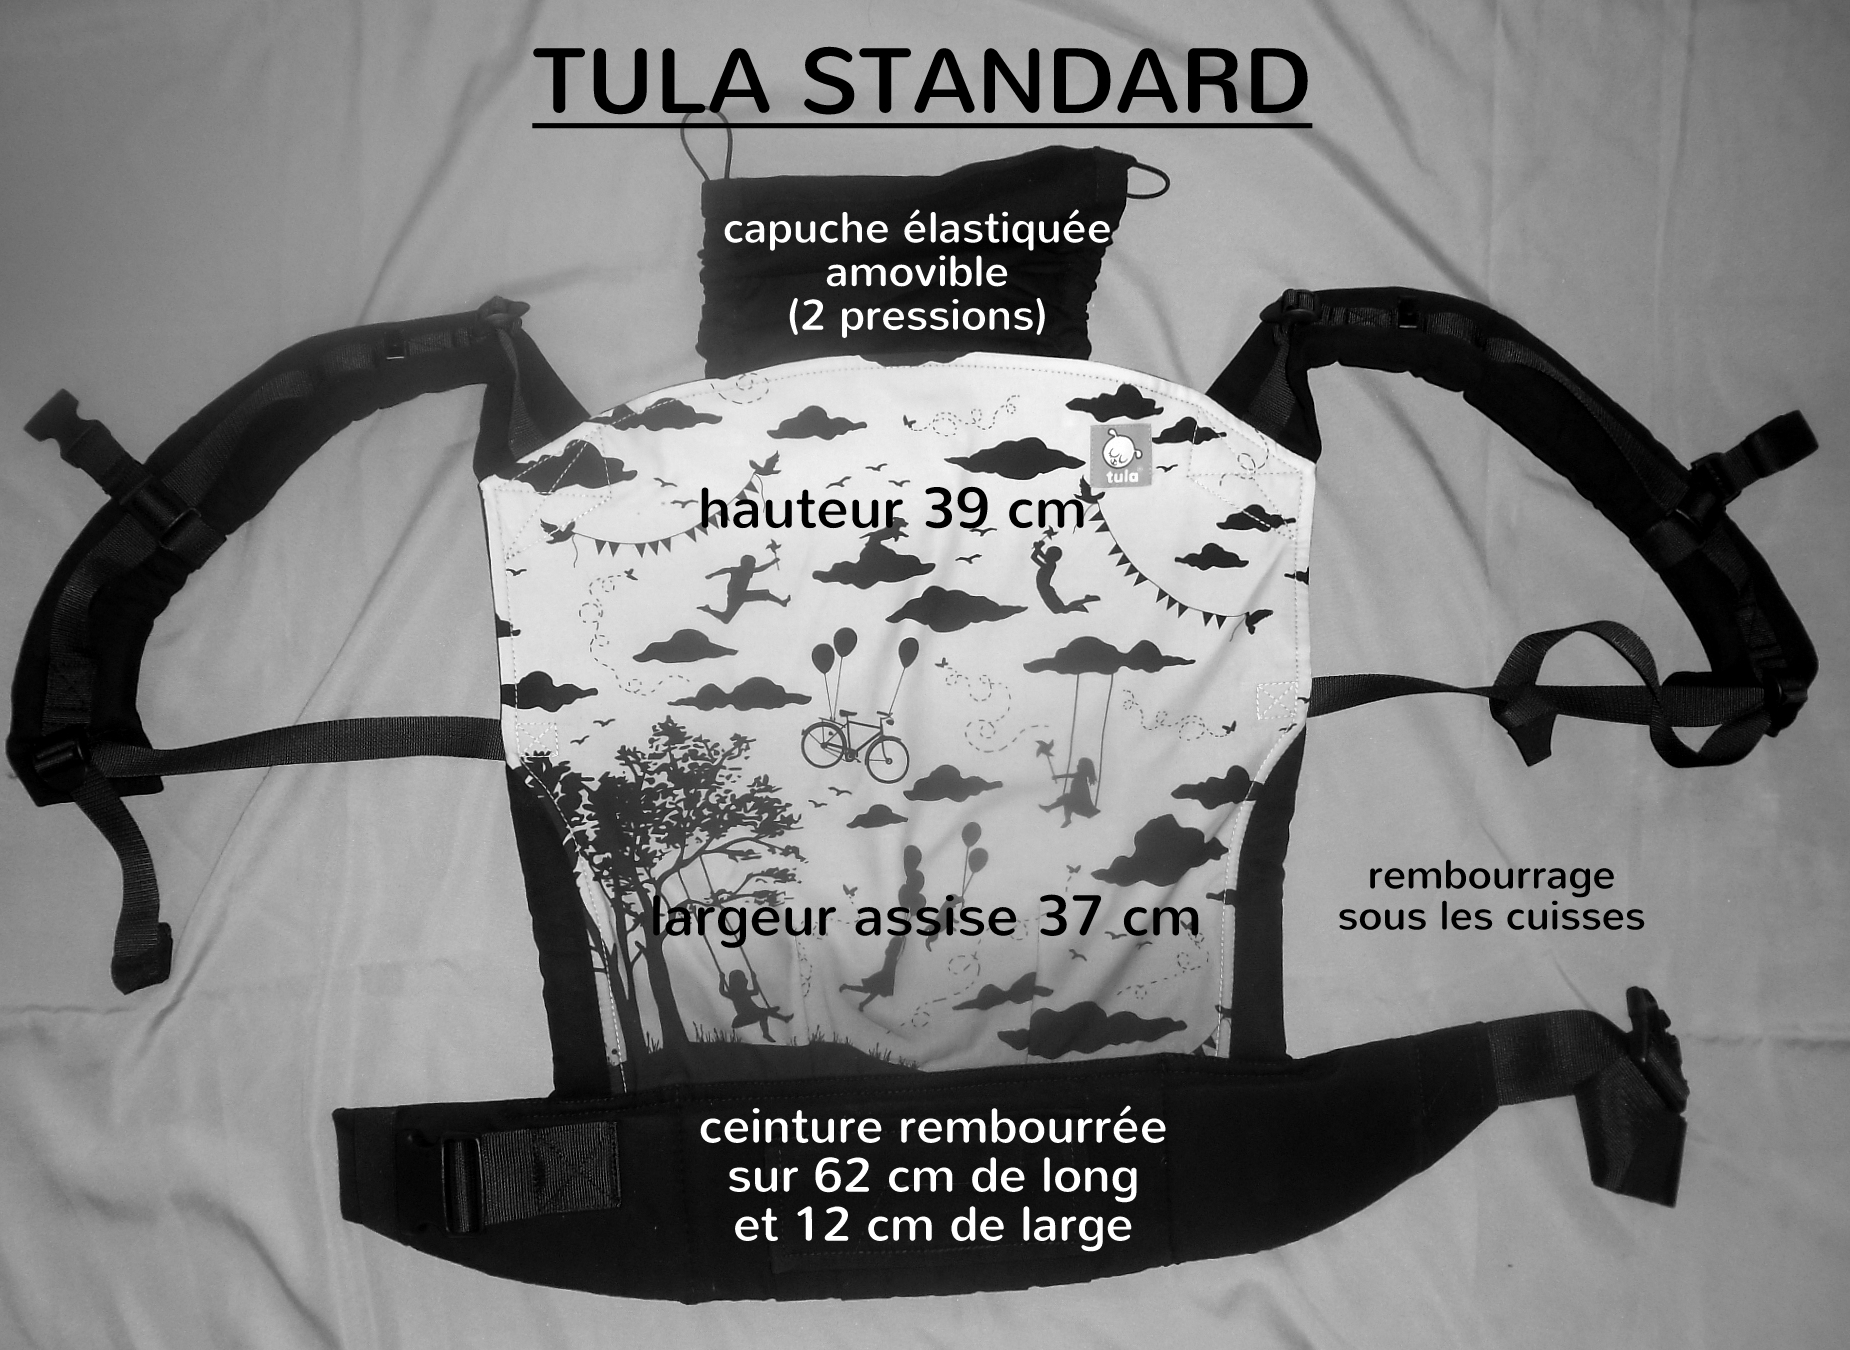 Tula standard babysize dimensions